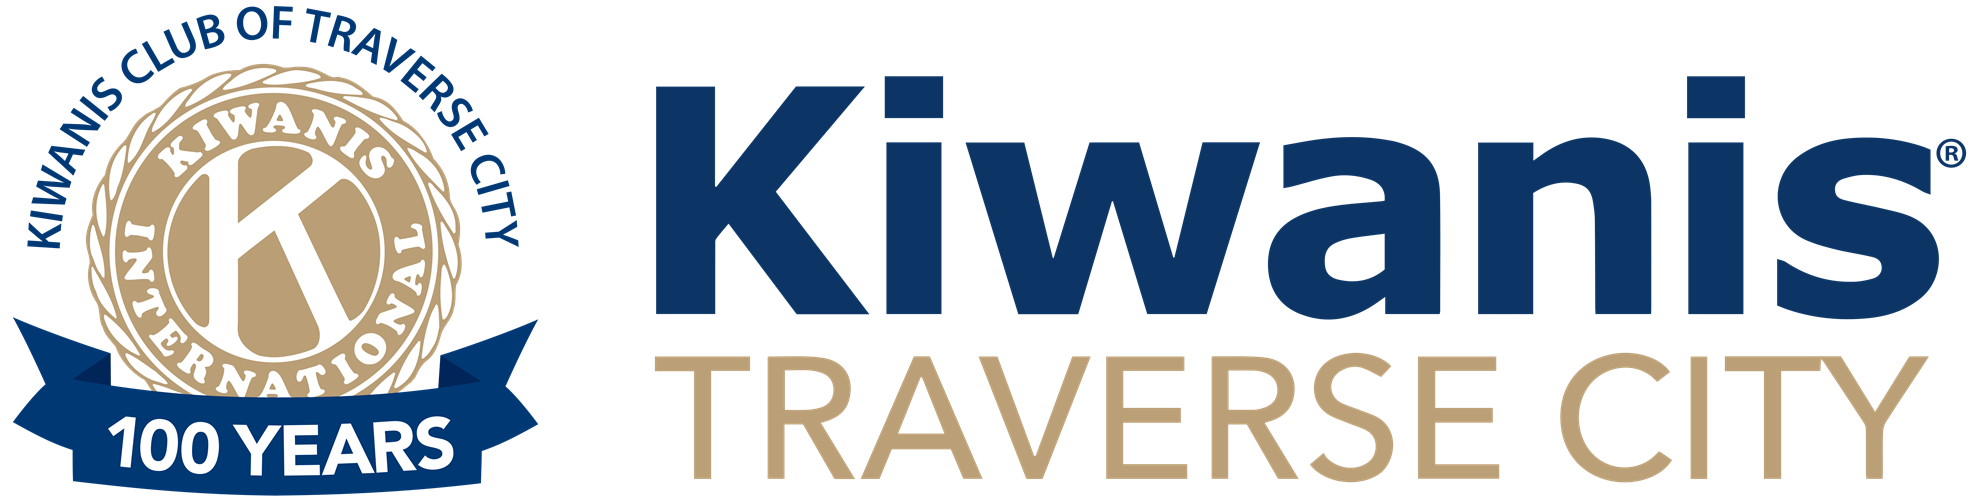 Kiwanis Club of Traverse City